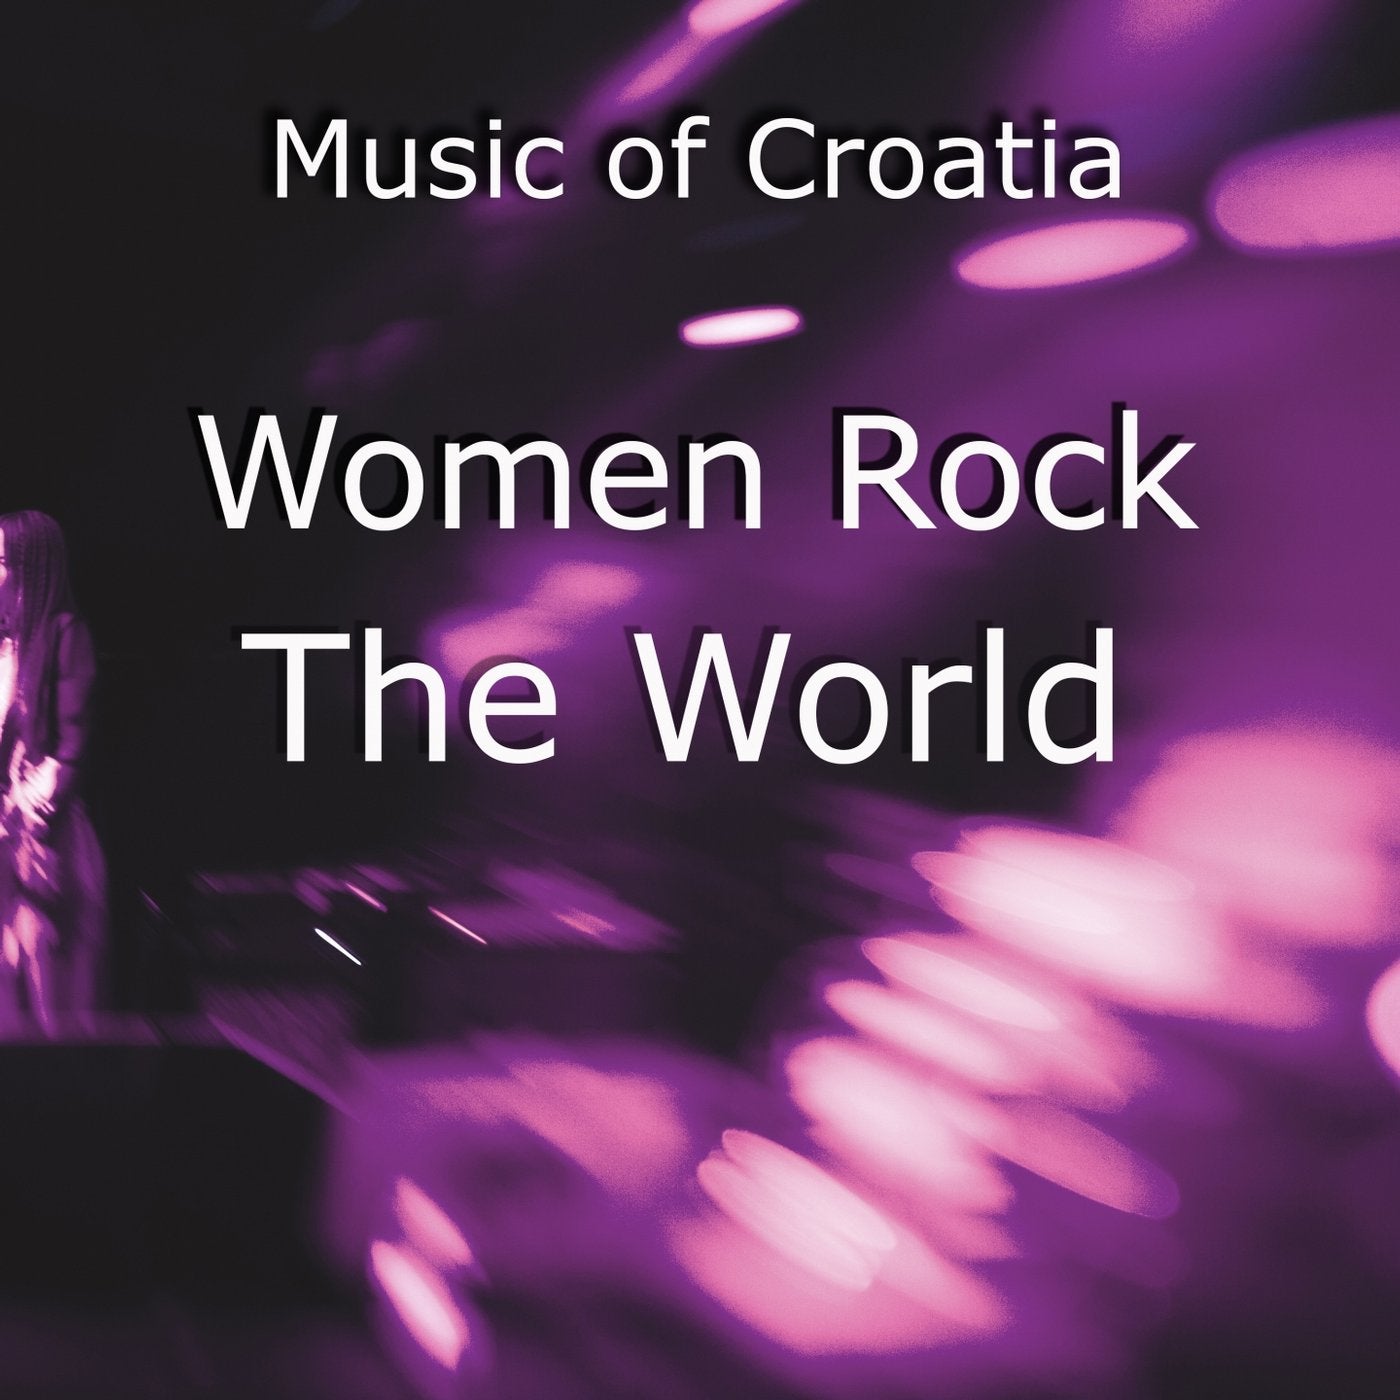 Music of croatia - women rock the world